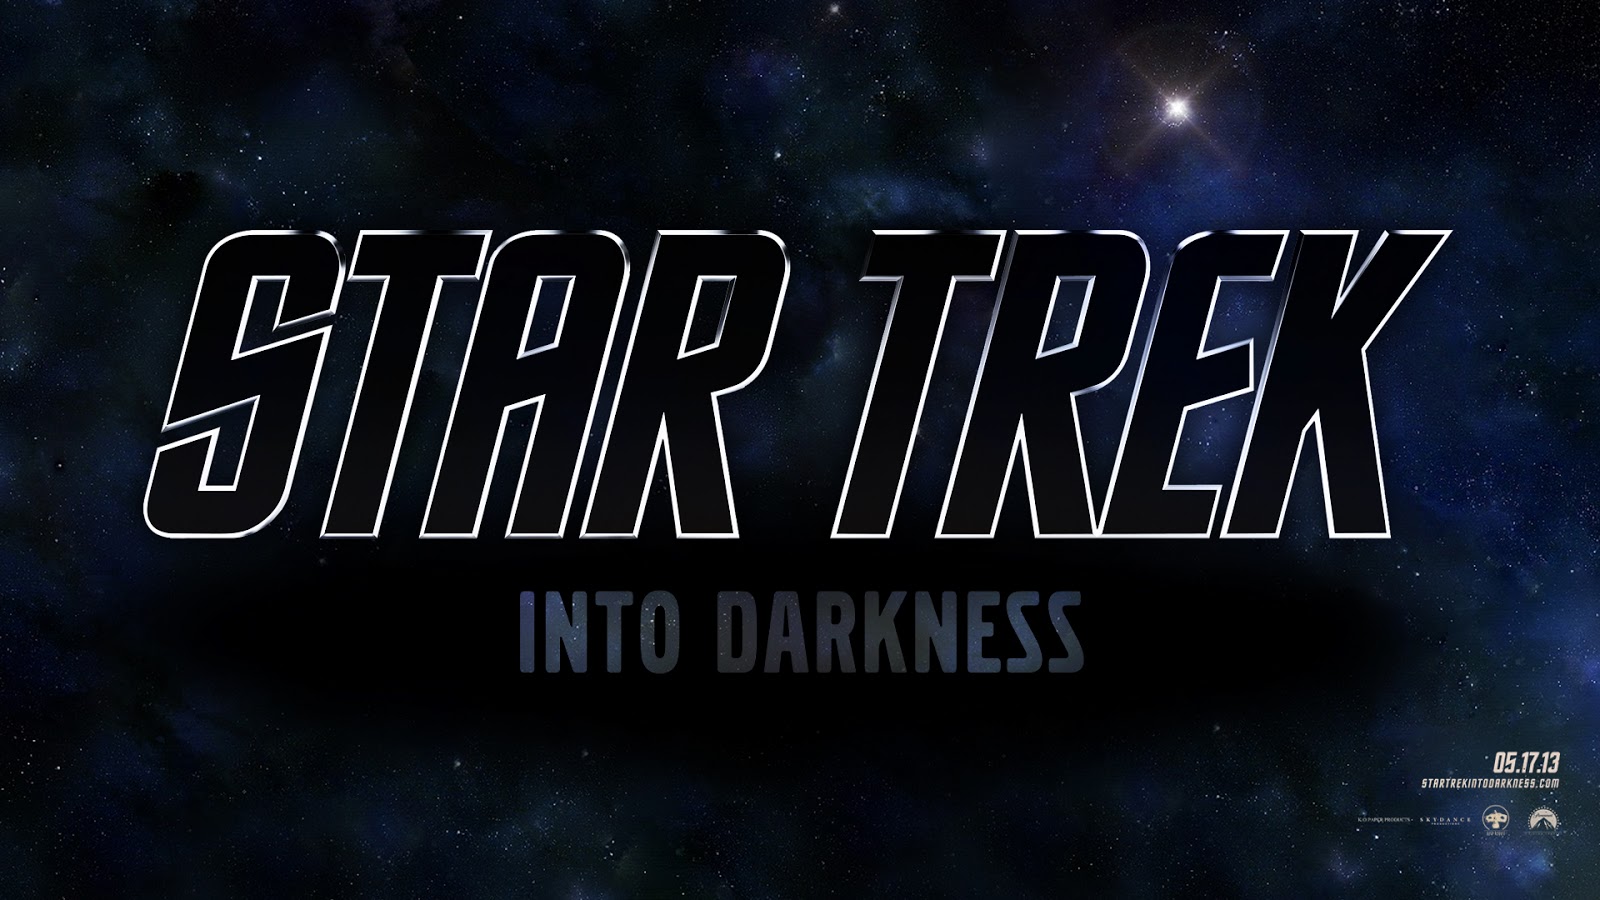 Star Trek Into Darkness wallpaper 1920x1080 001